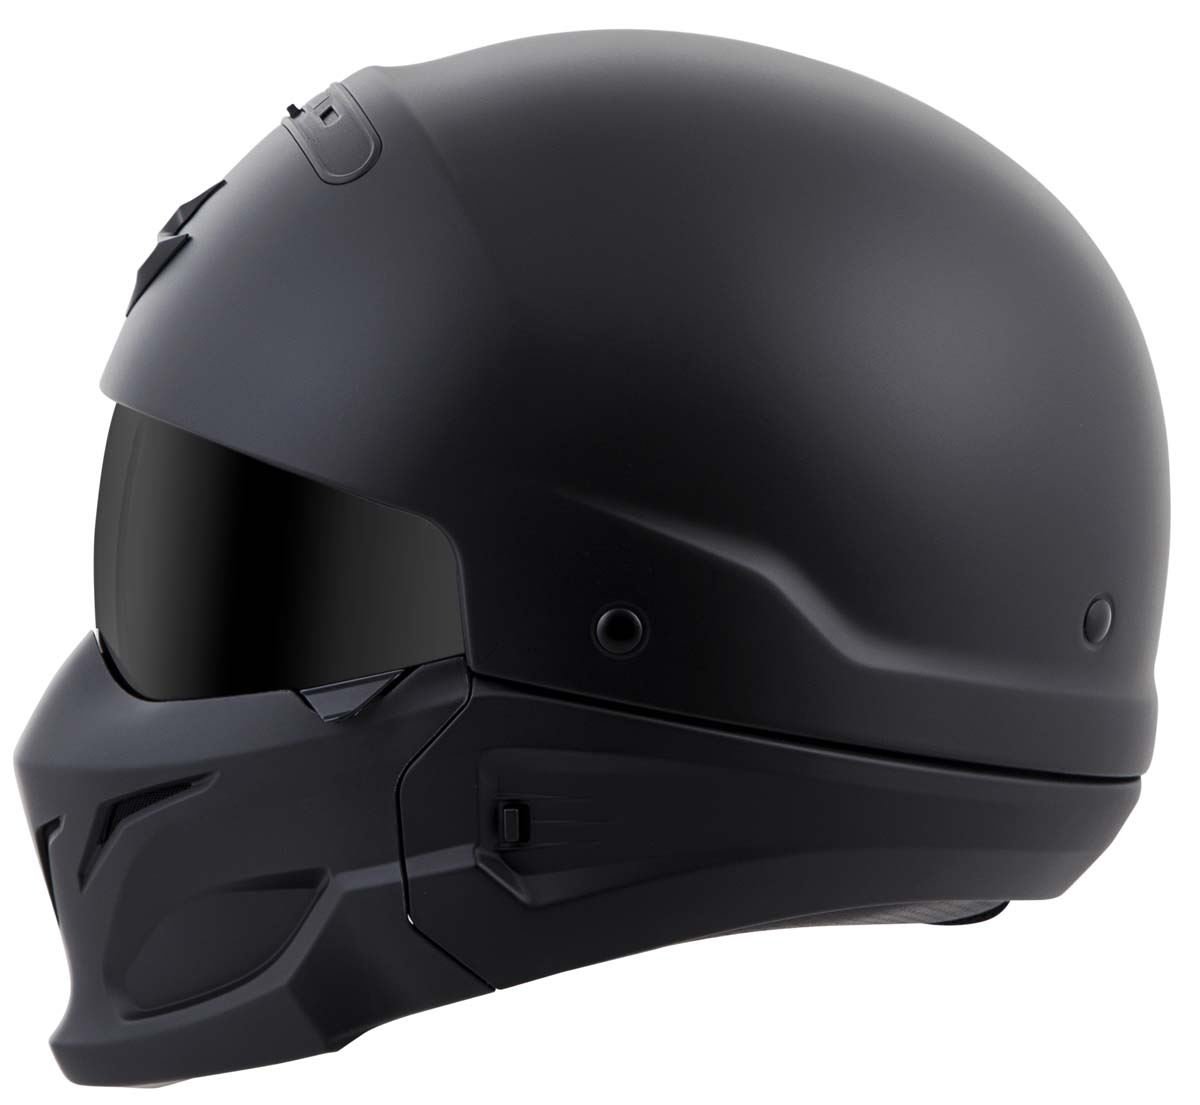 Scorpion Covert Ratnik Phantom Hybrid Helmet